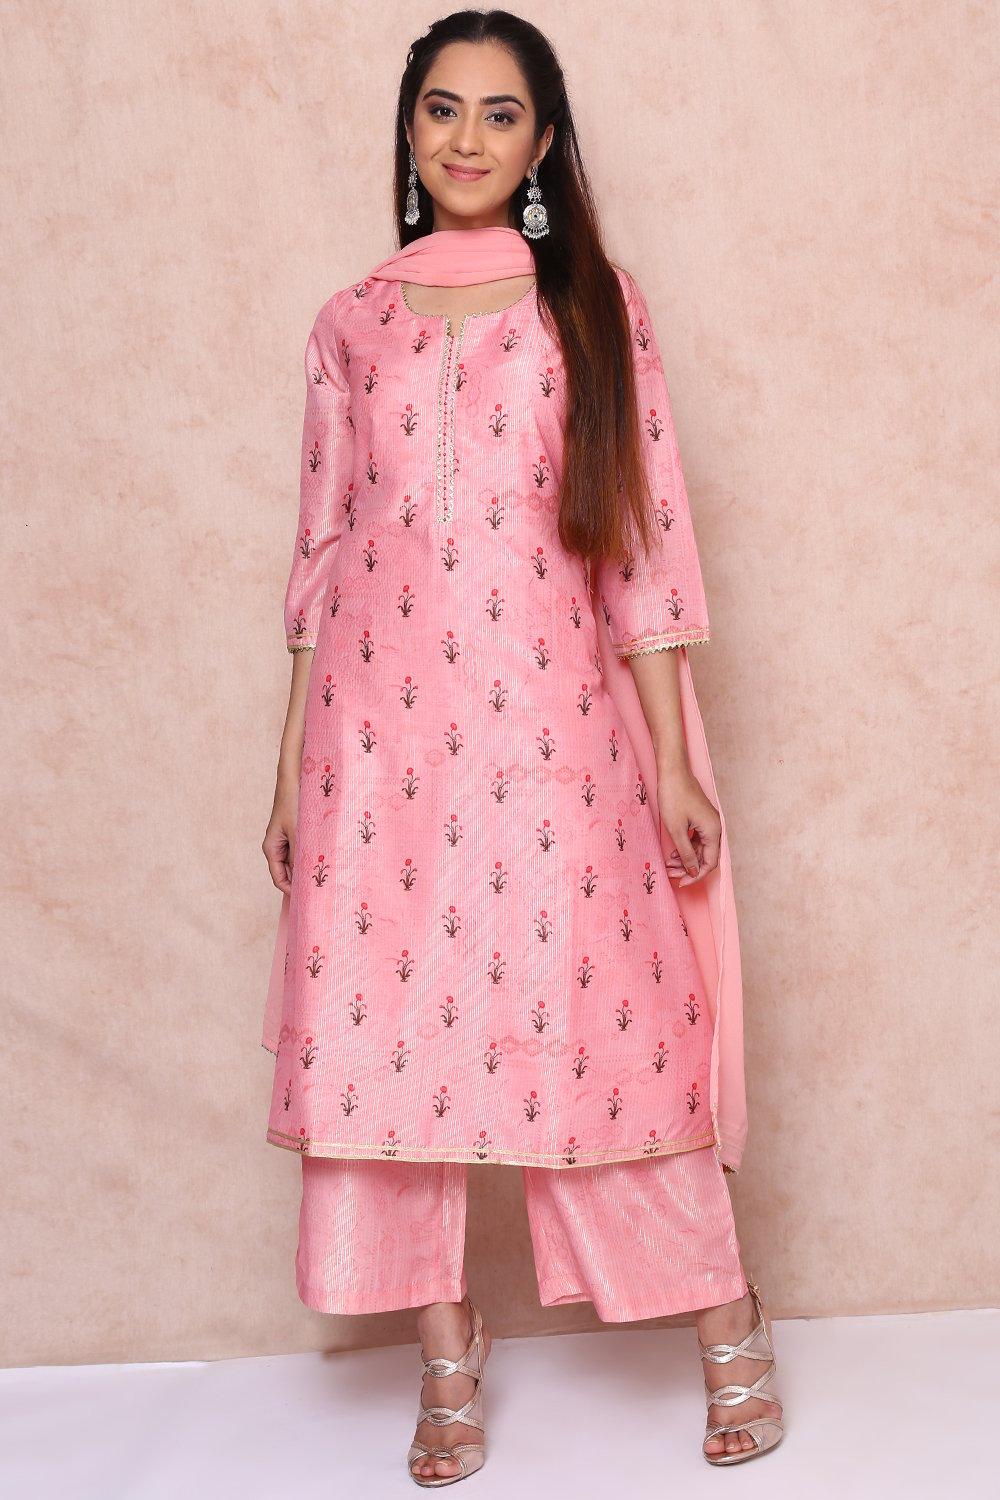 Buy Online Peach Polyester Asymmetric Set for Women Best Price at Rangriti.com - RSKSUMMERS1